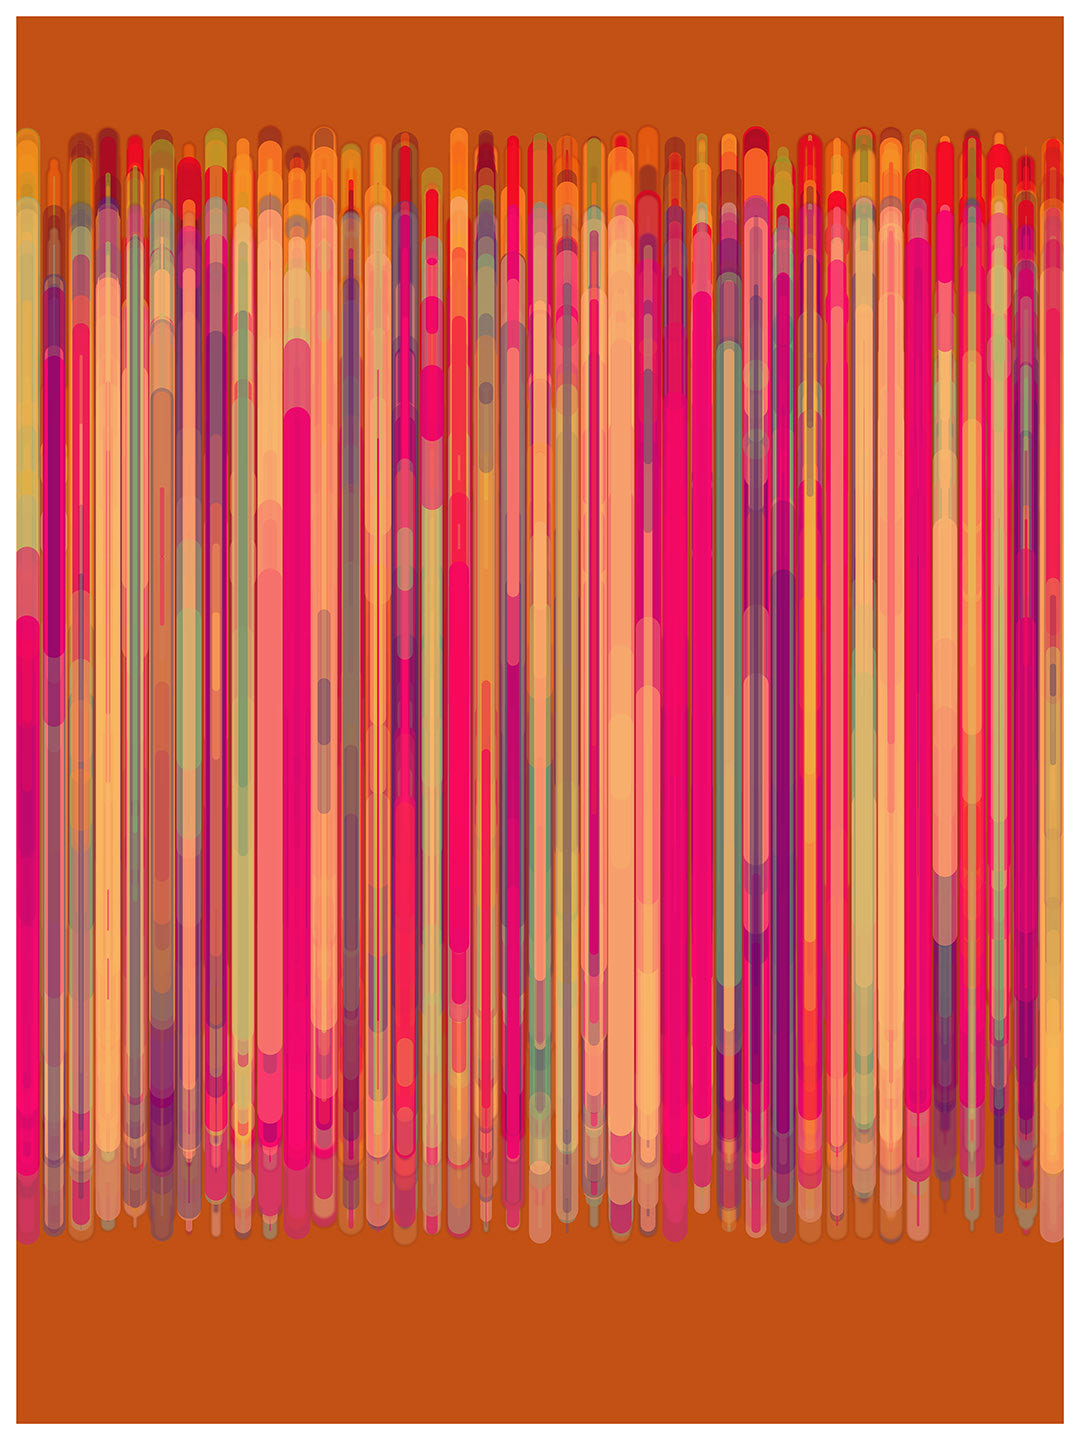 abstract artwork colorful colors creativeCoding Digital Art  geneartiveart ILLUSTRATION  p5js processing